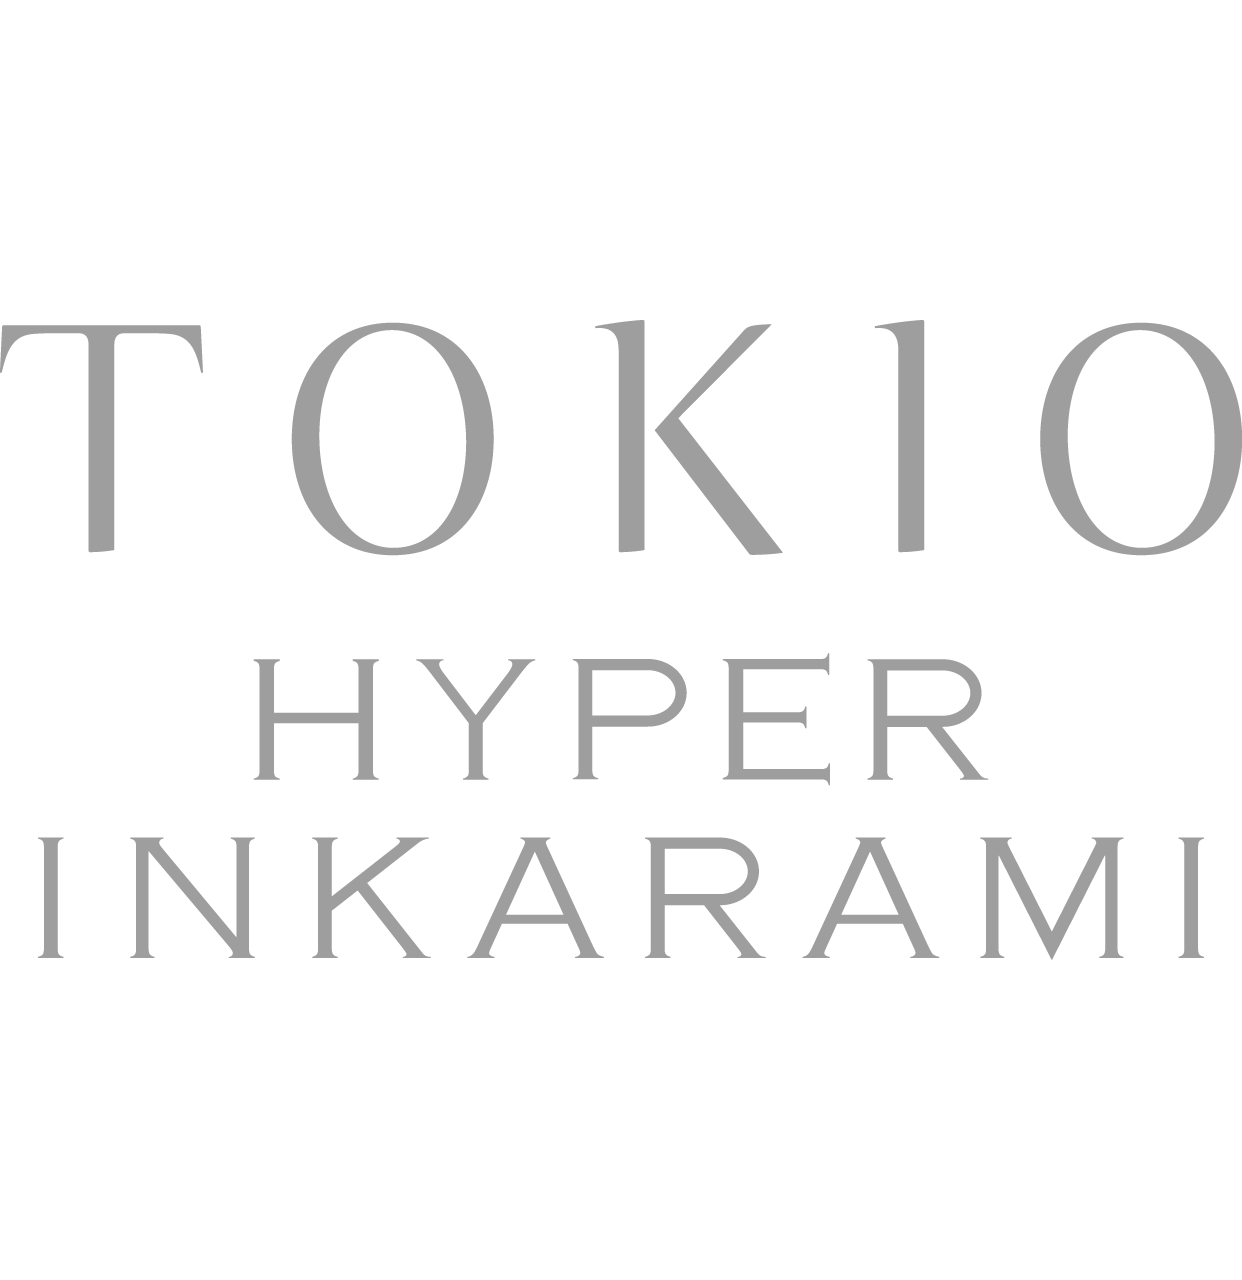 TOKIO HYPER INKARAMI